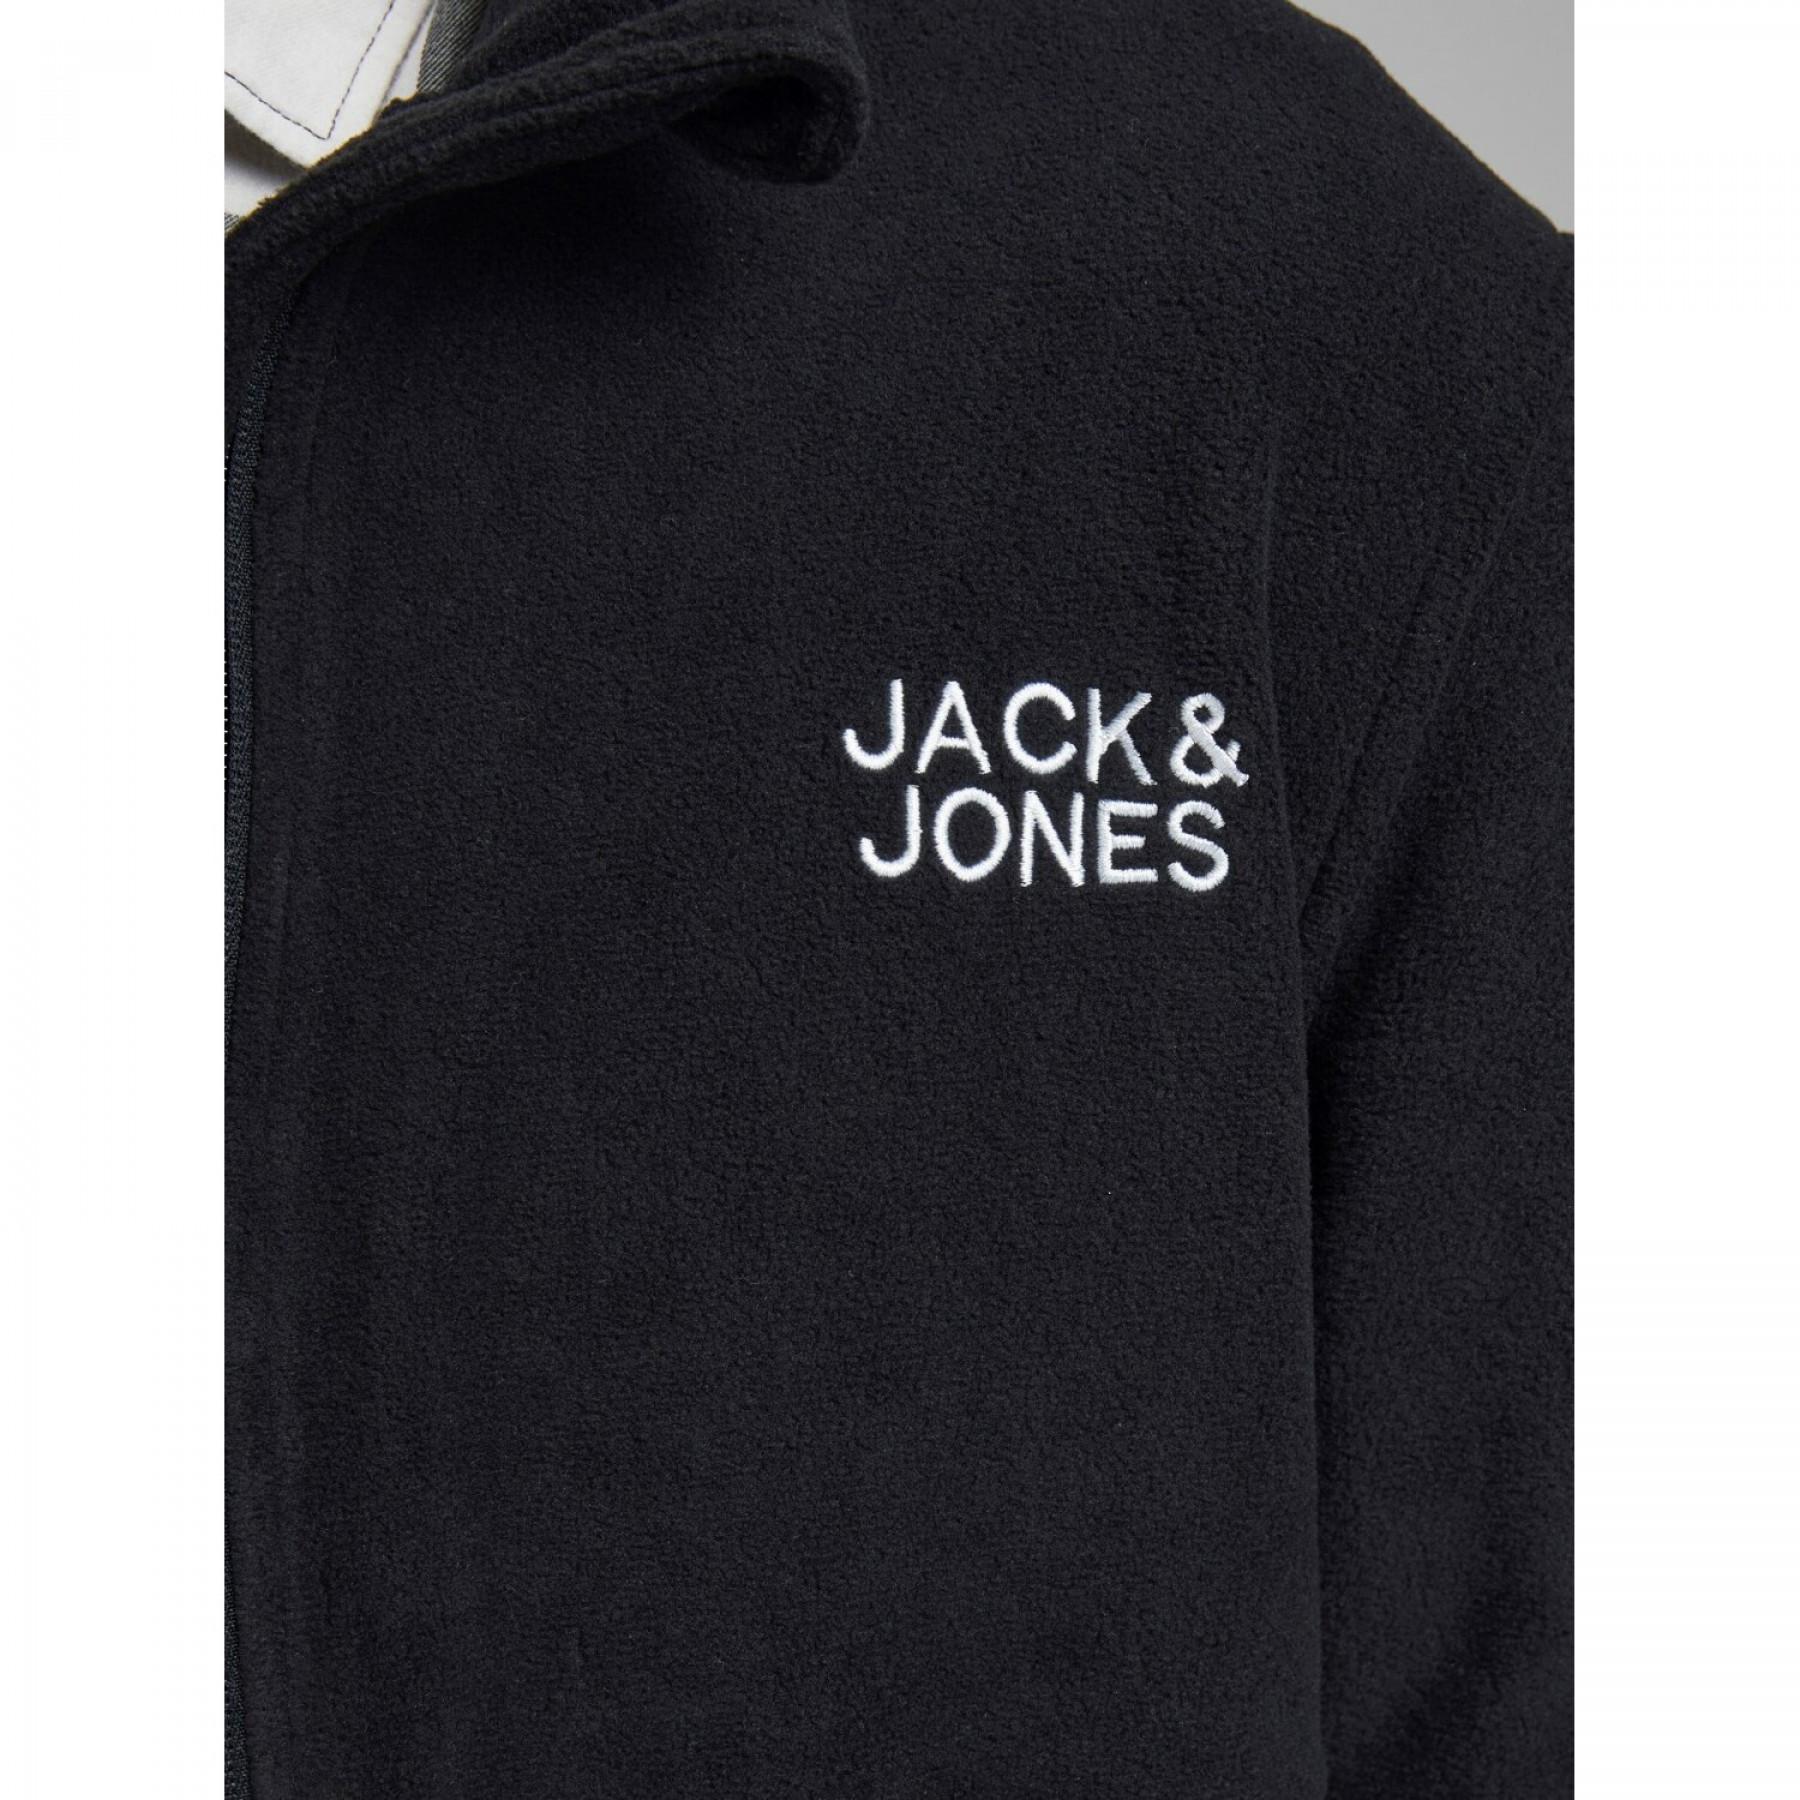 Veste Jack & Jones Hype Fleece